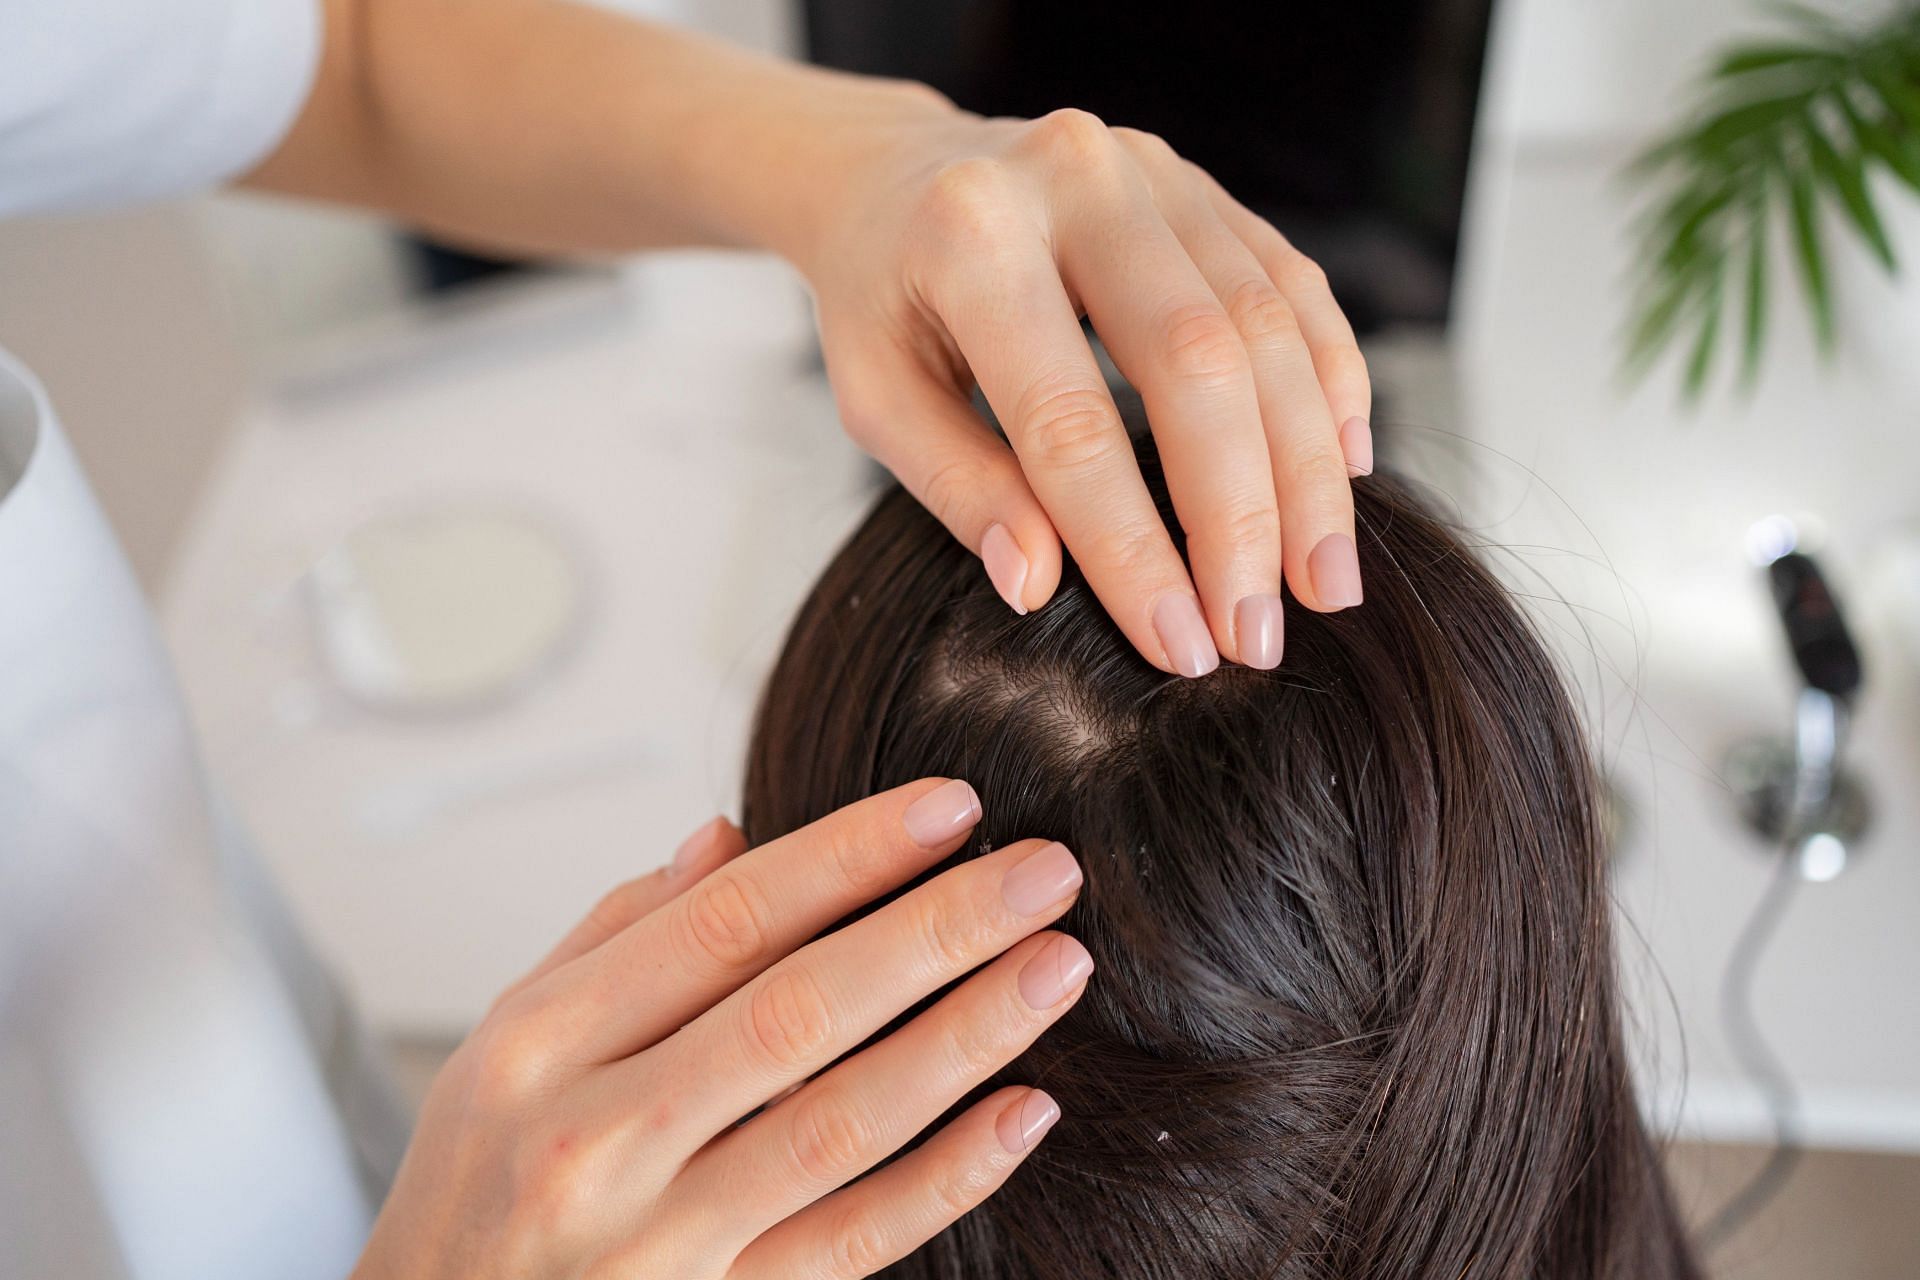 Treatment for scalp eczema generally also involves management with flare ups. (Image via Freepik/ Freepik)